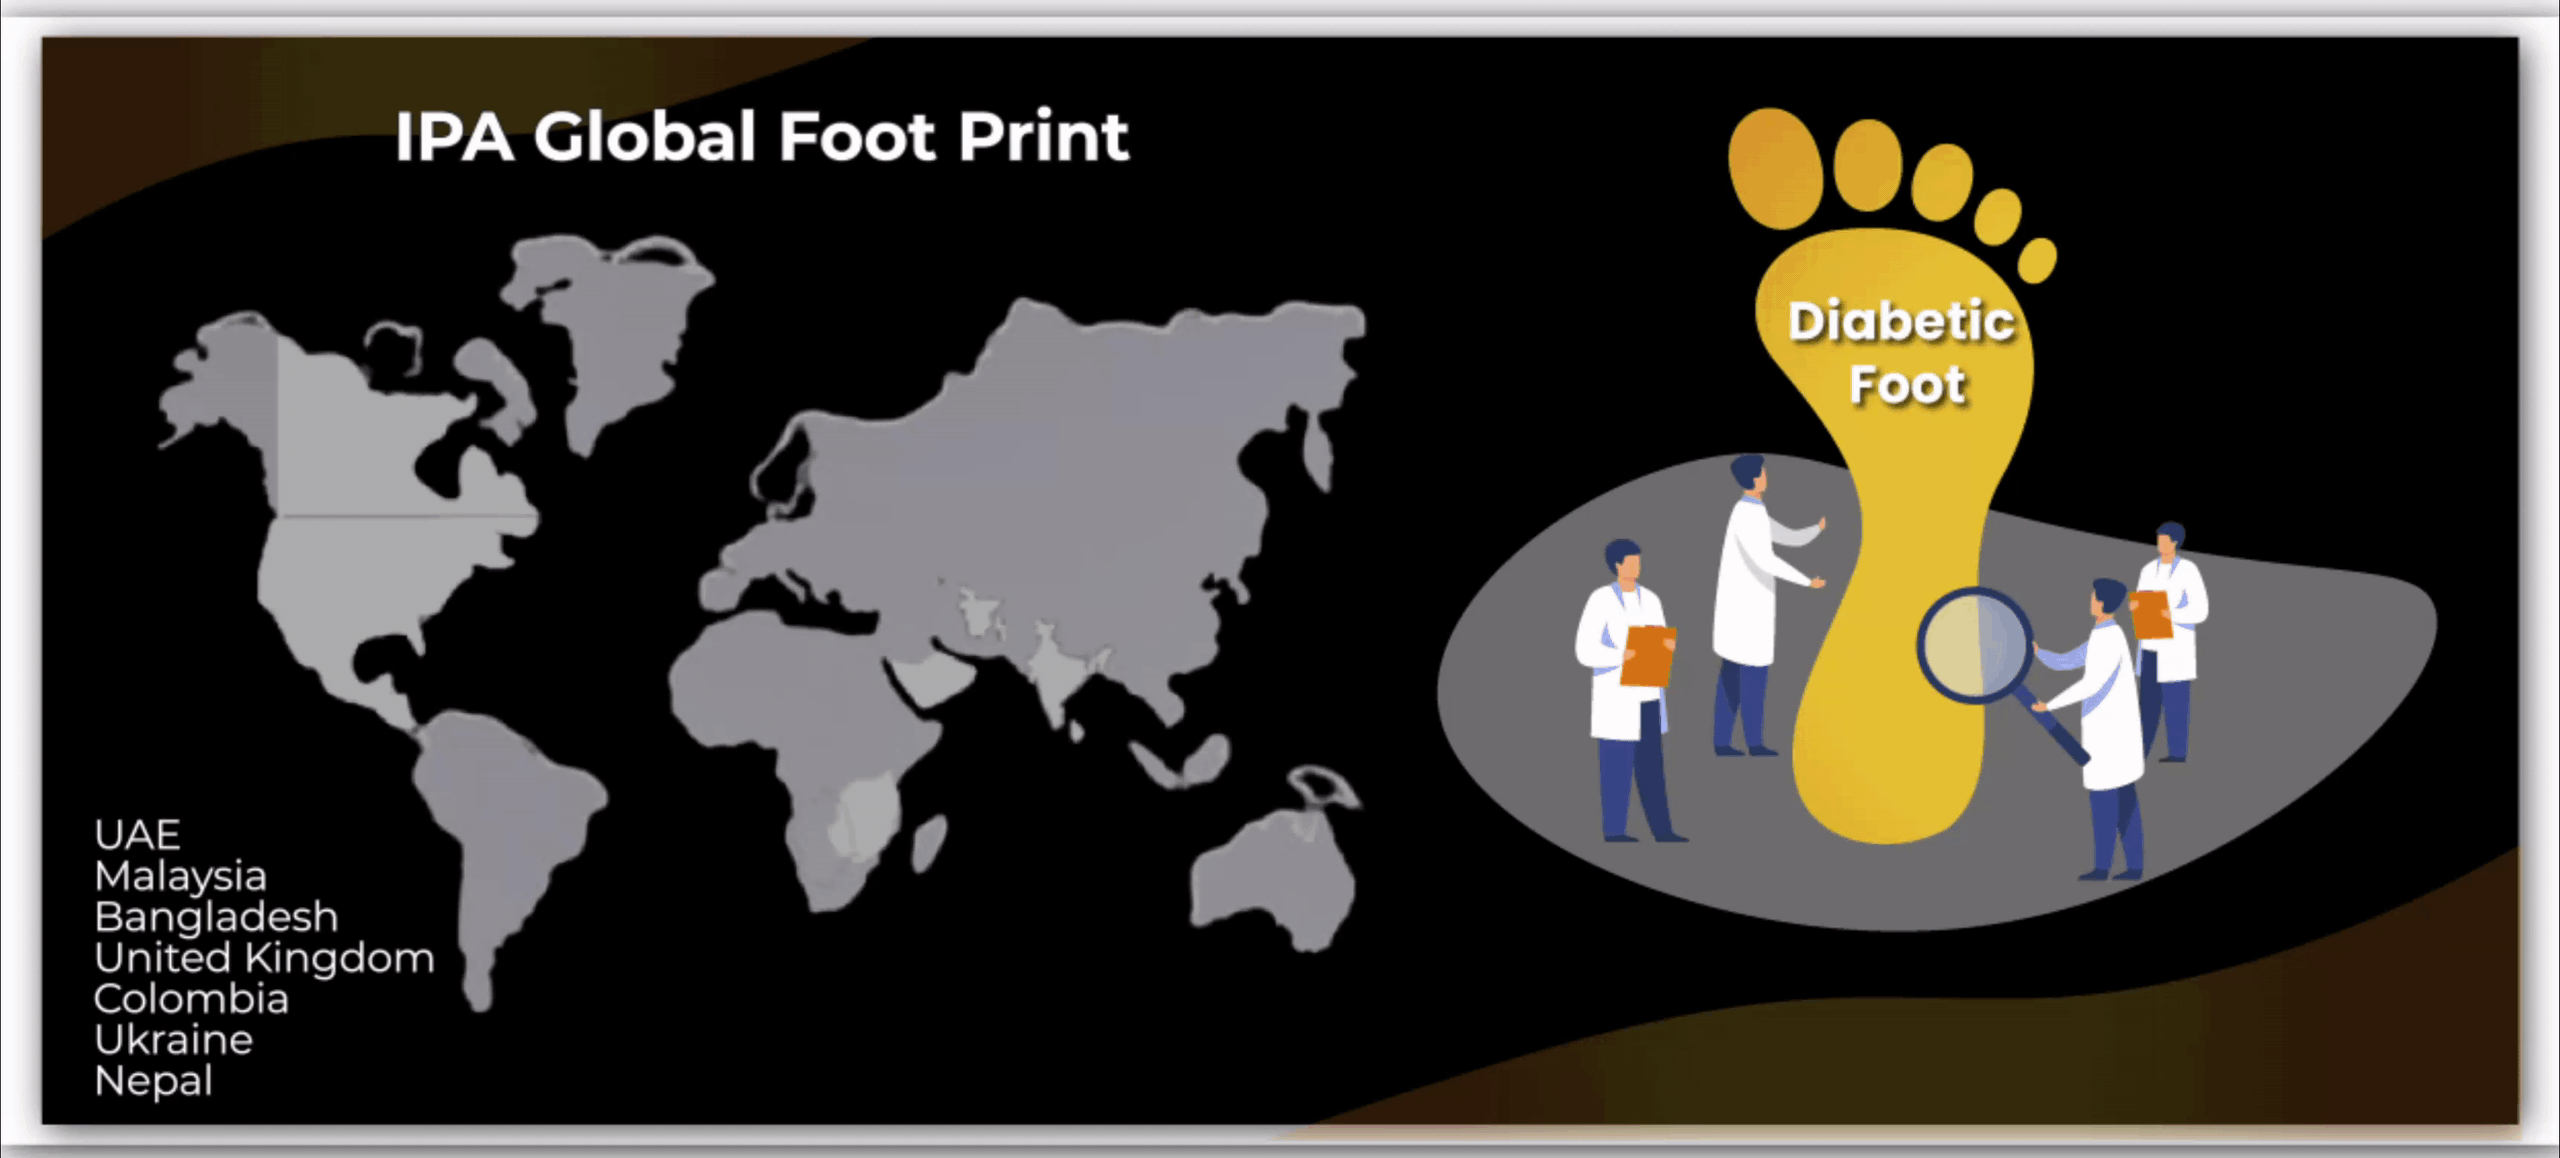 INDIAN PODIATRY ASSOCIATION (IPA) Global Foot Print